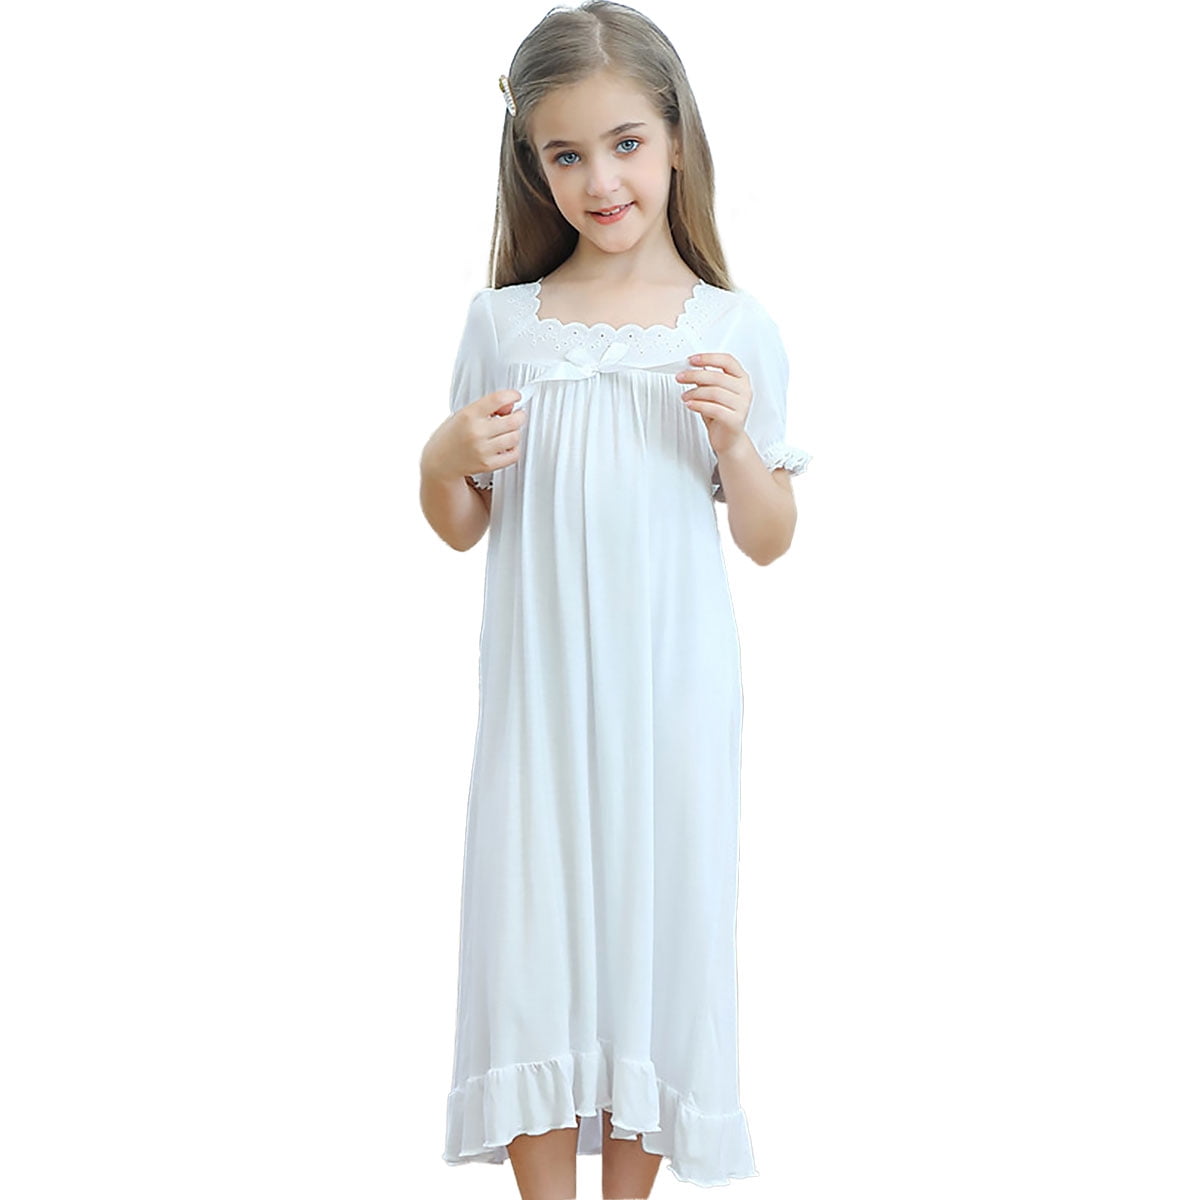 Girls' Princess Nighties Lace Nightgowns Modal Cotton Sleepwear for 3-12 Years 